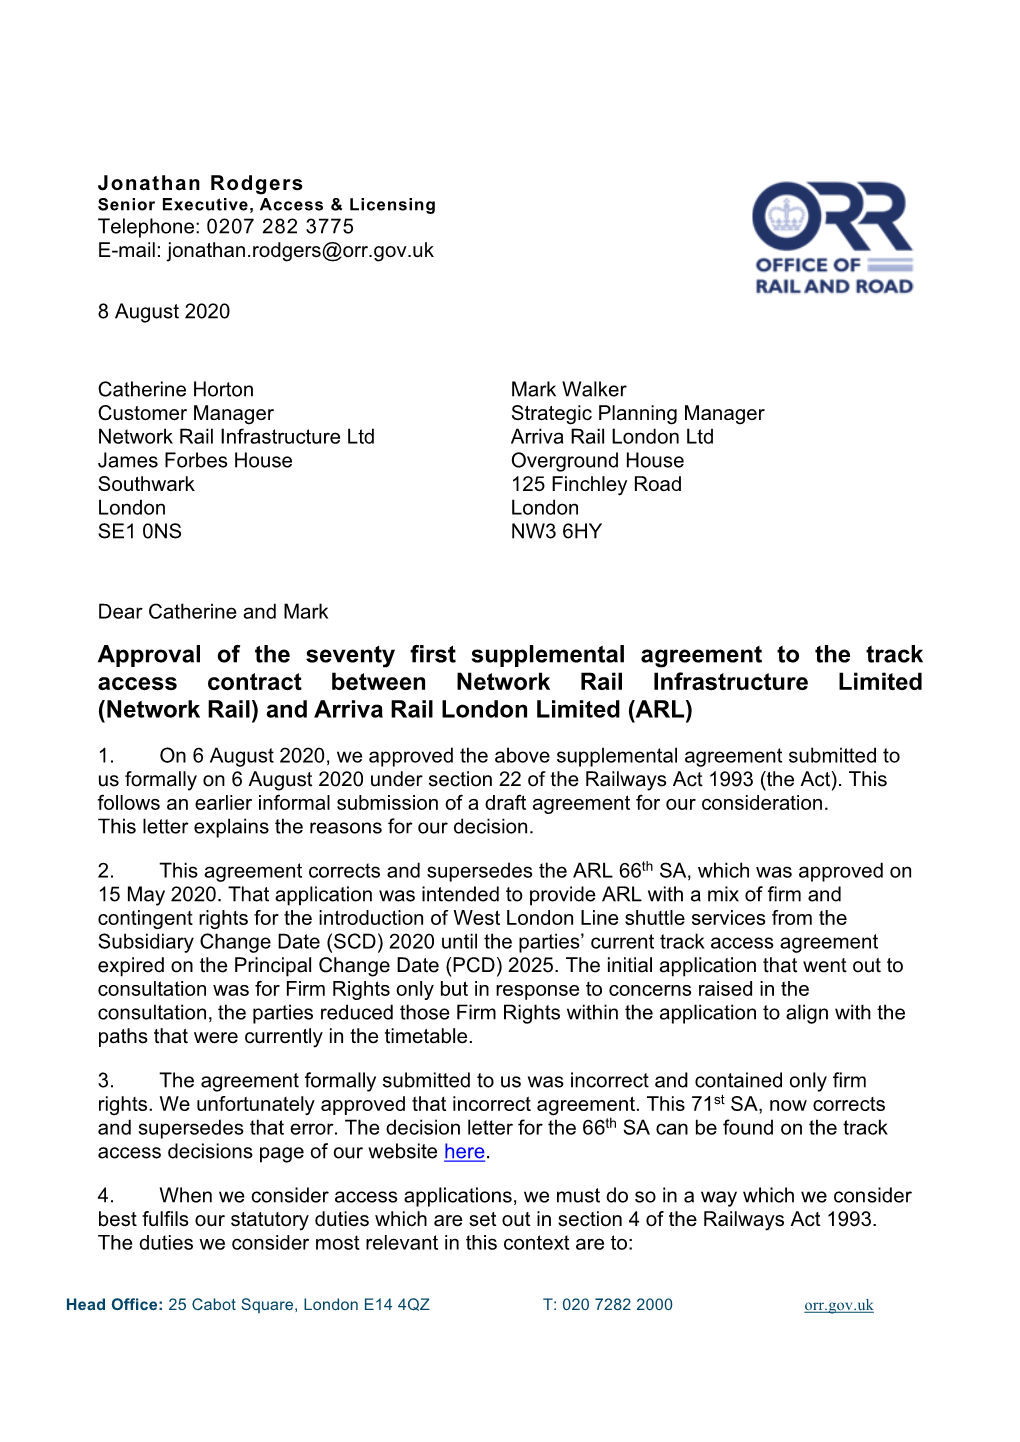 Arriva Rail London Limited 71St Supplemental Agreement Decision Letter